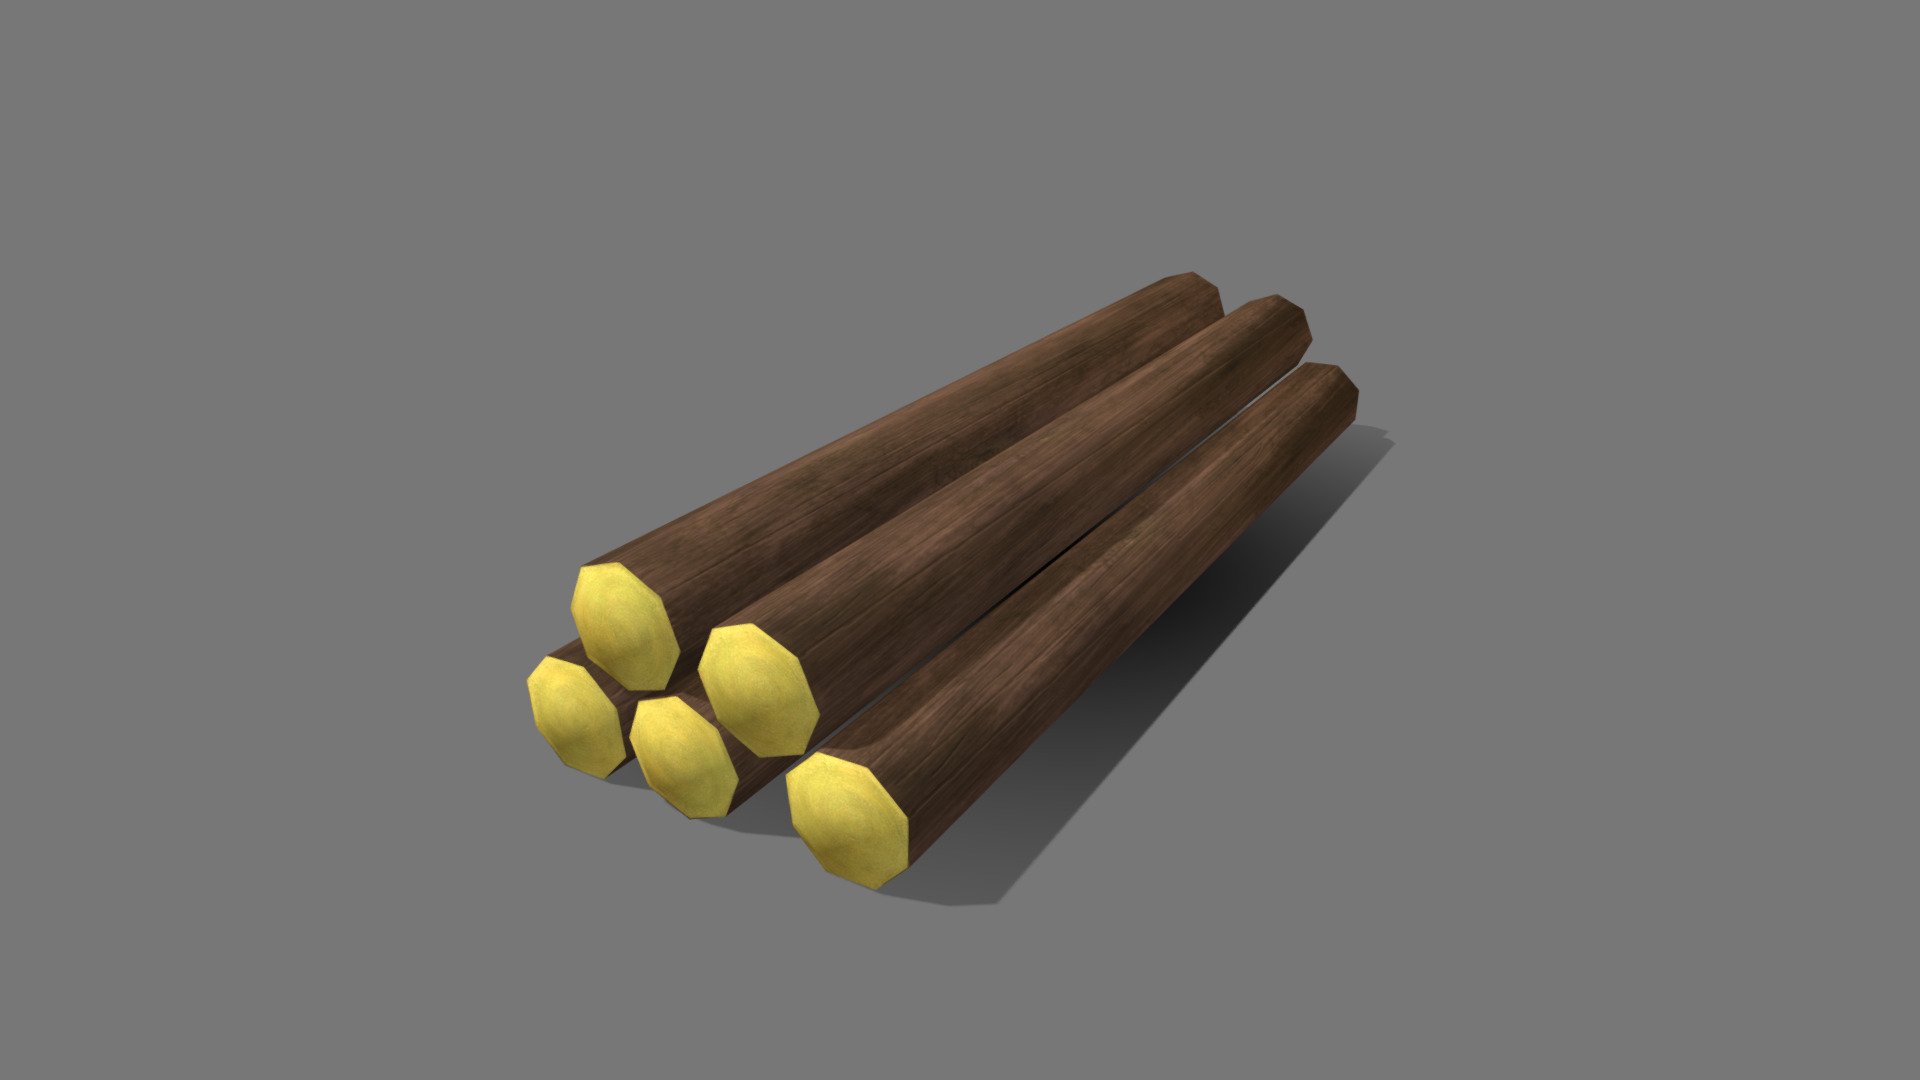 Story
Let's build something in wood.

Ref
Mesh: original hand-designed

Texture: original hand-painted

UV: original hand-designed

Log
20201202: upload - Wood Stack - 3D model by Ayuya 3d model